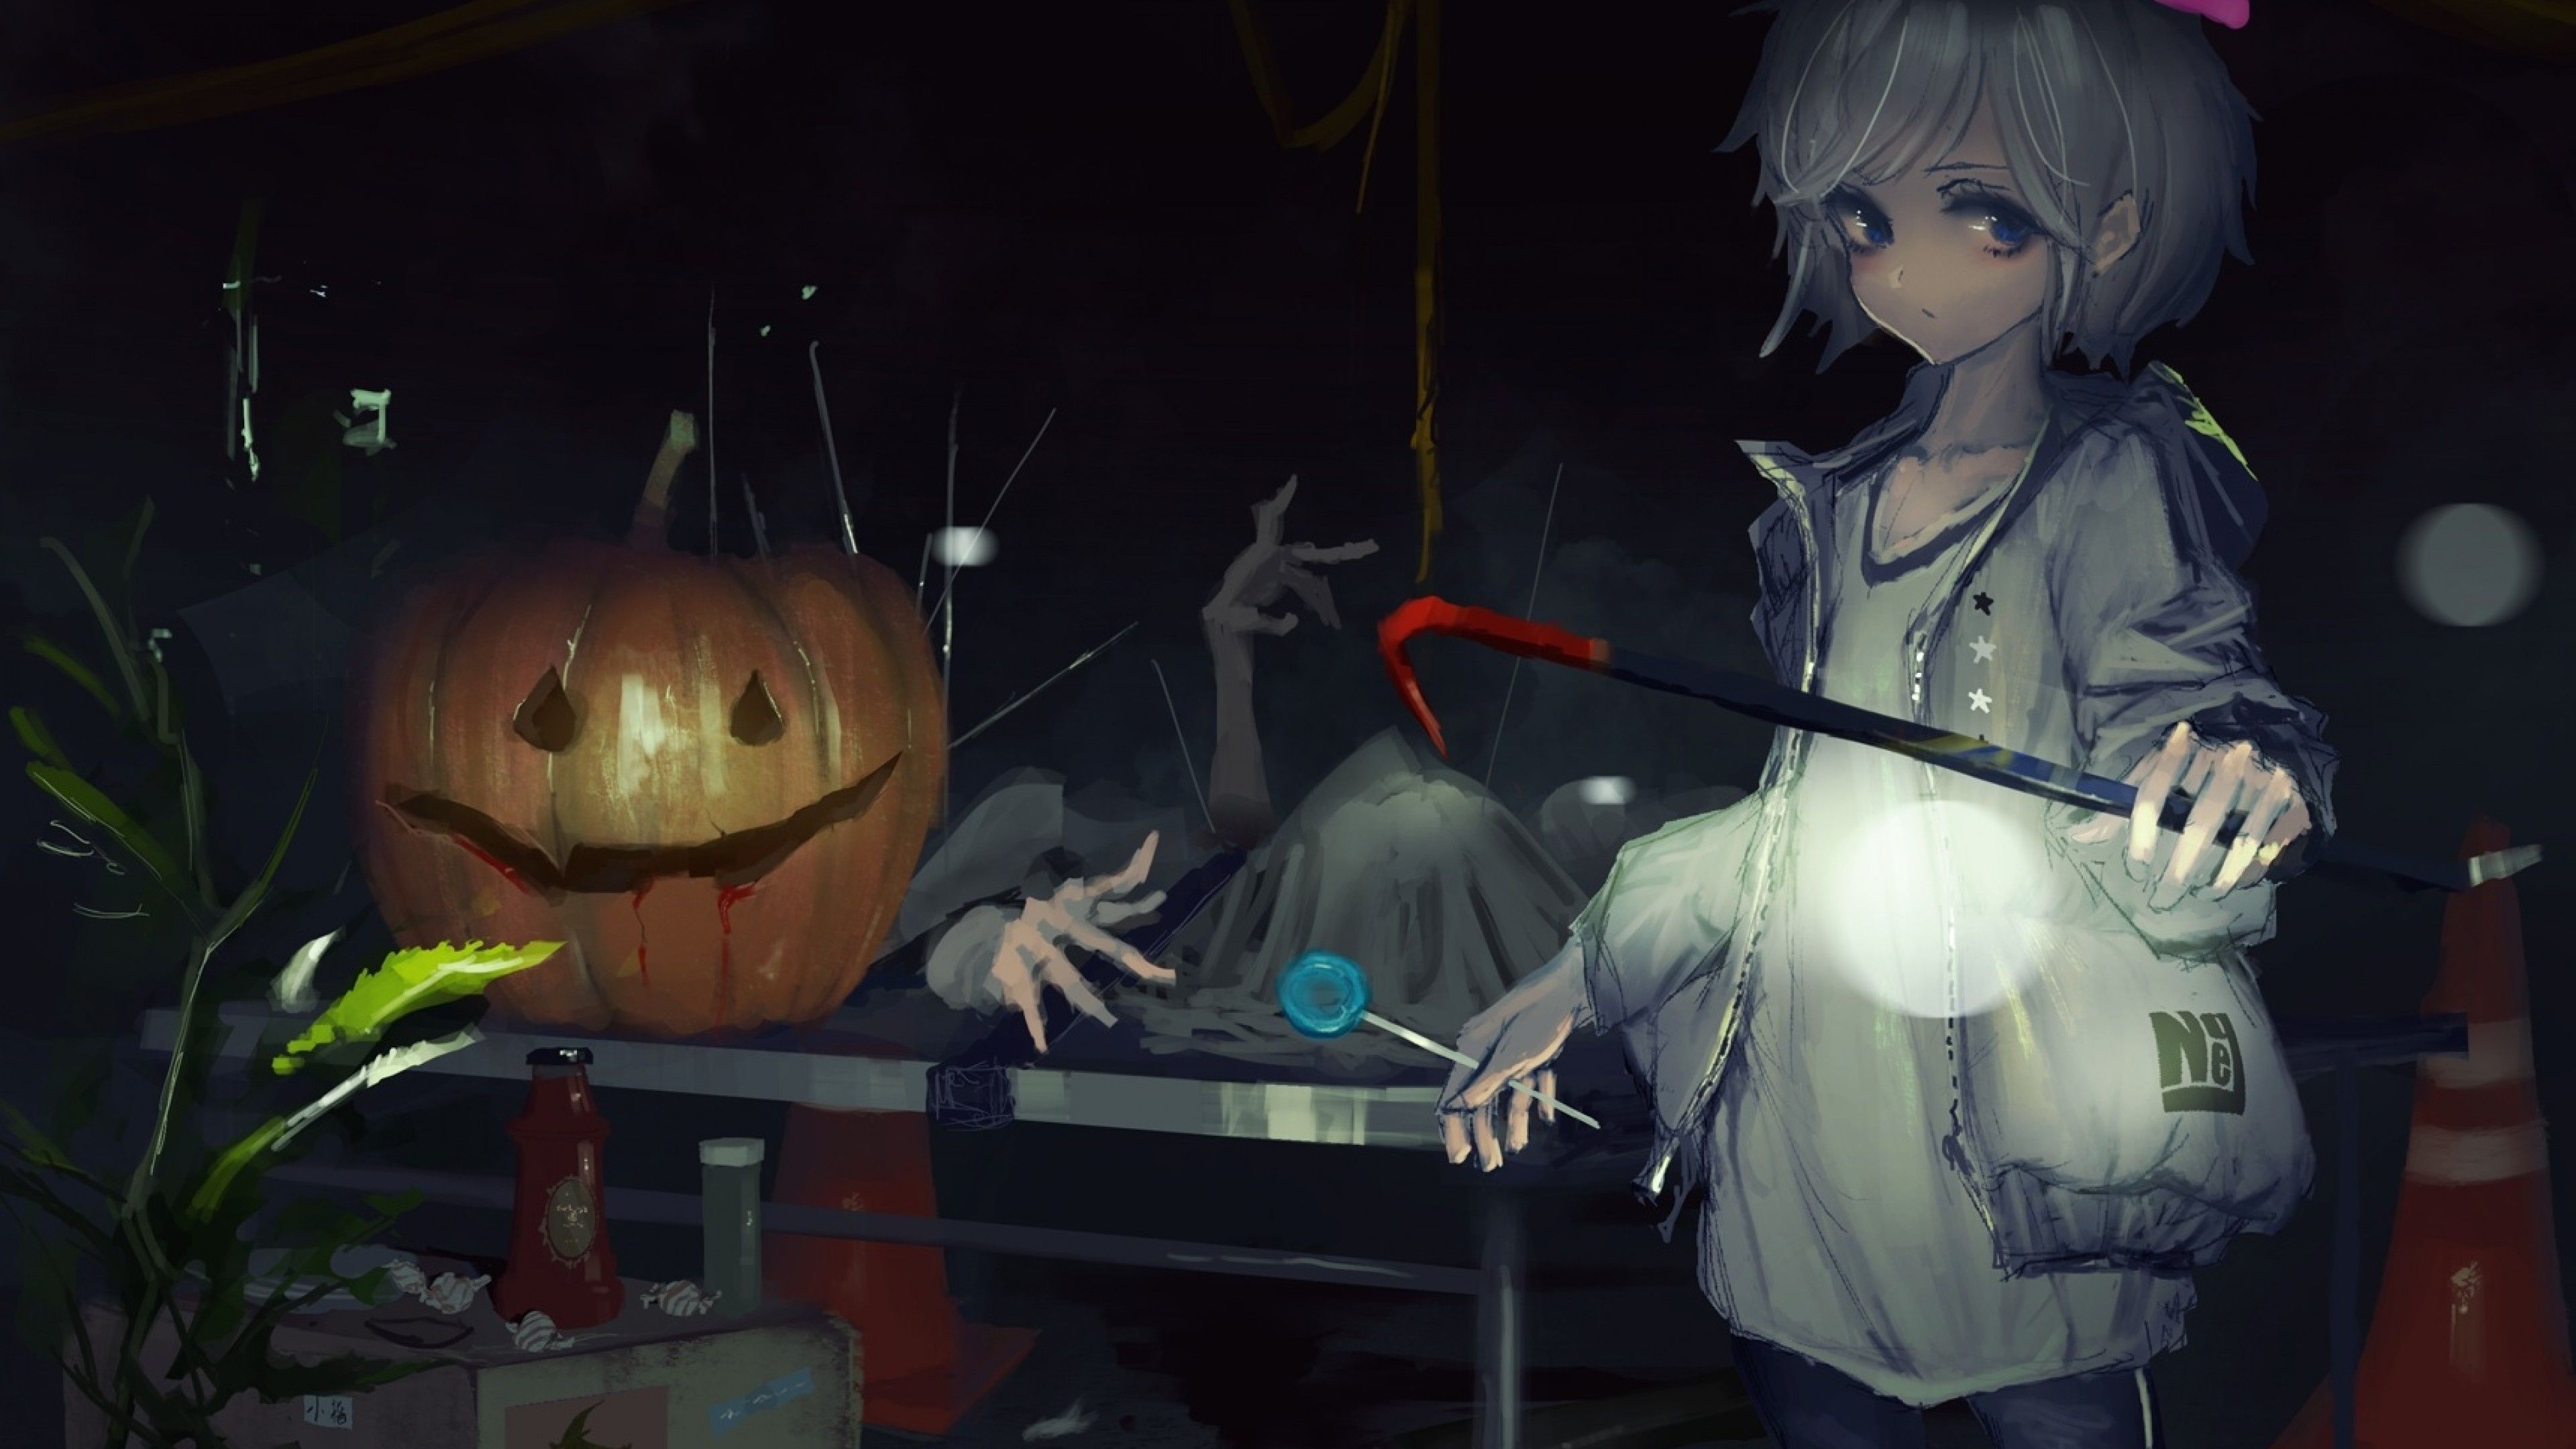 Download 3840x2160 Anime Boy, Halloween Pumpkin, Scary